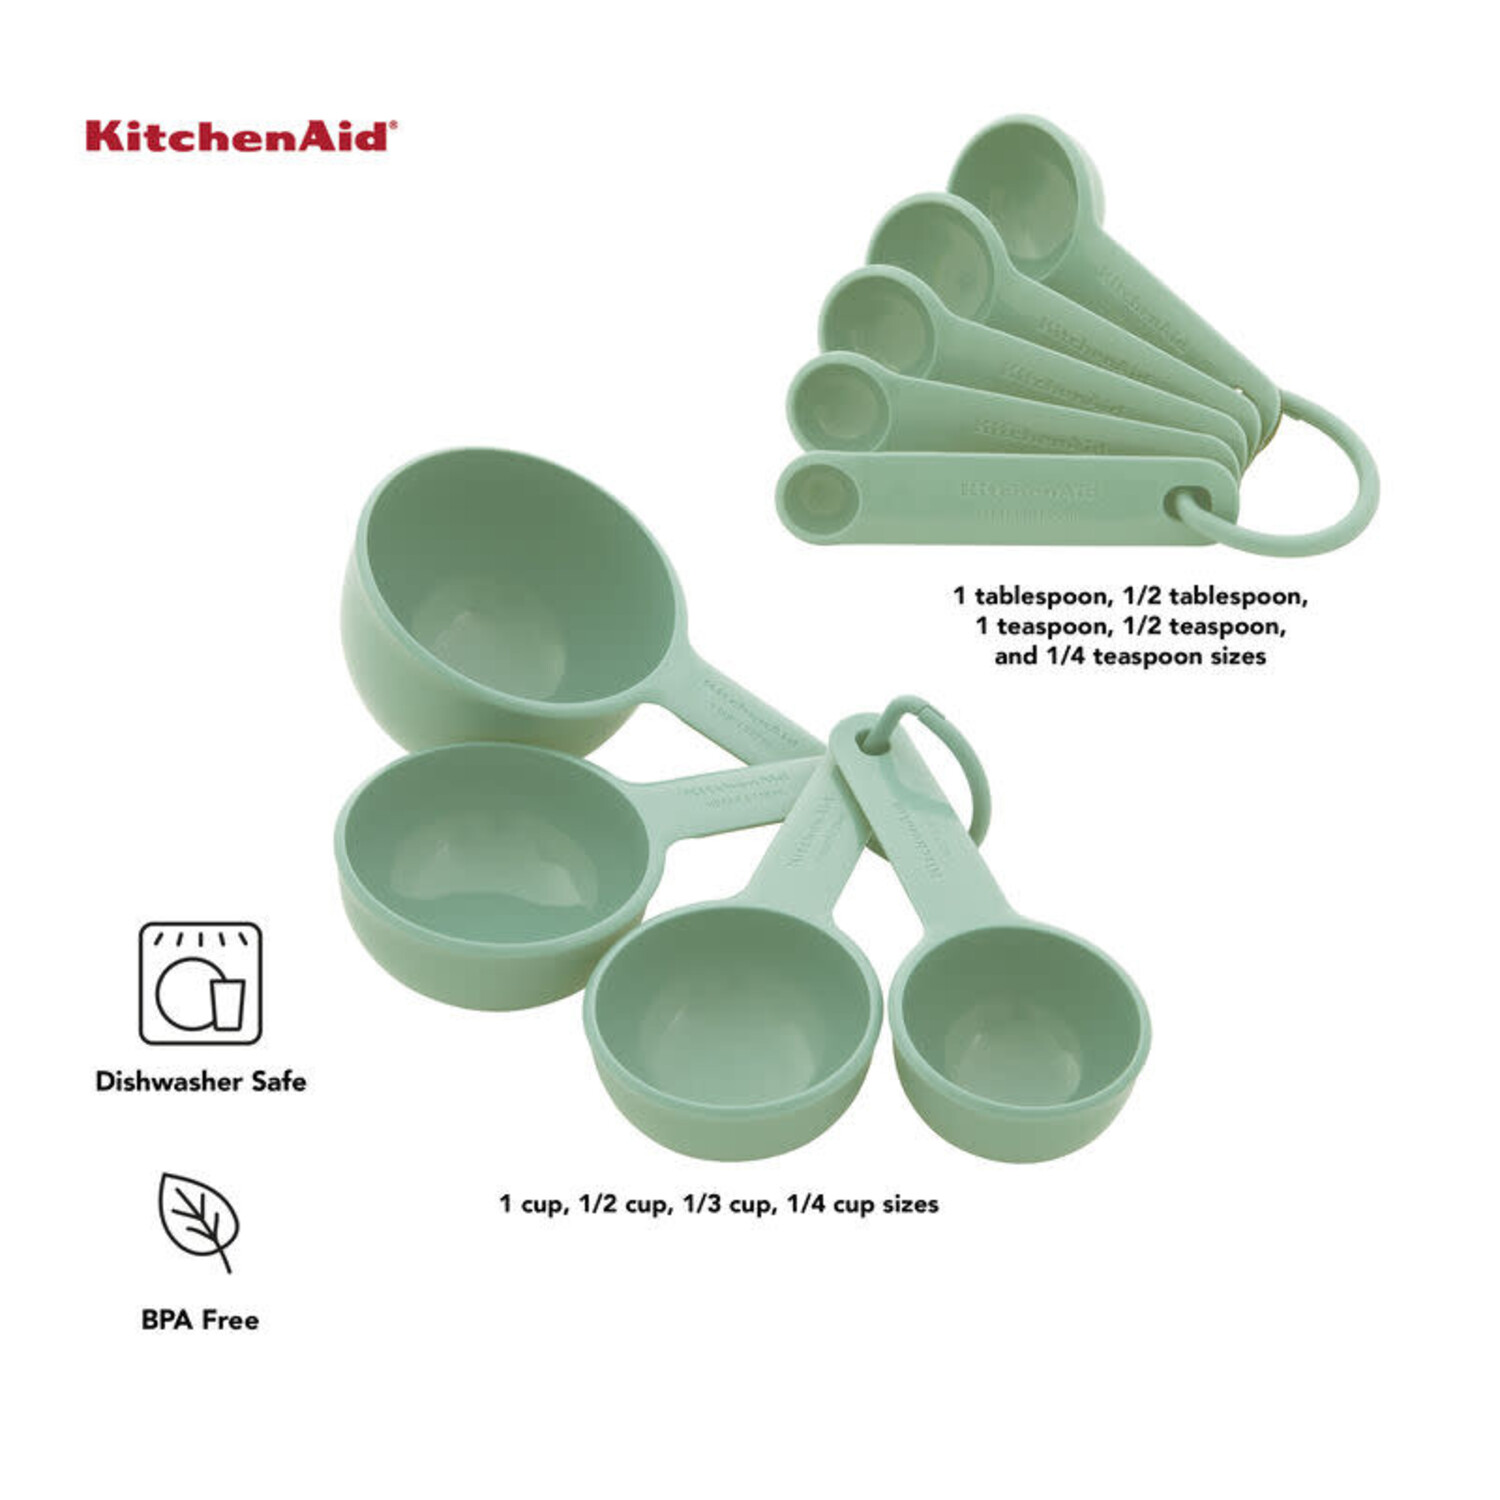  KitchenAid Classic Mixing Bowls, Set of 3, Pistachio